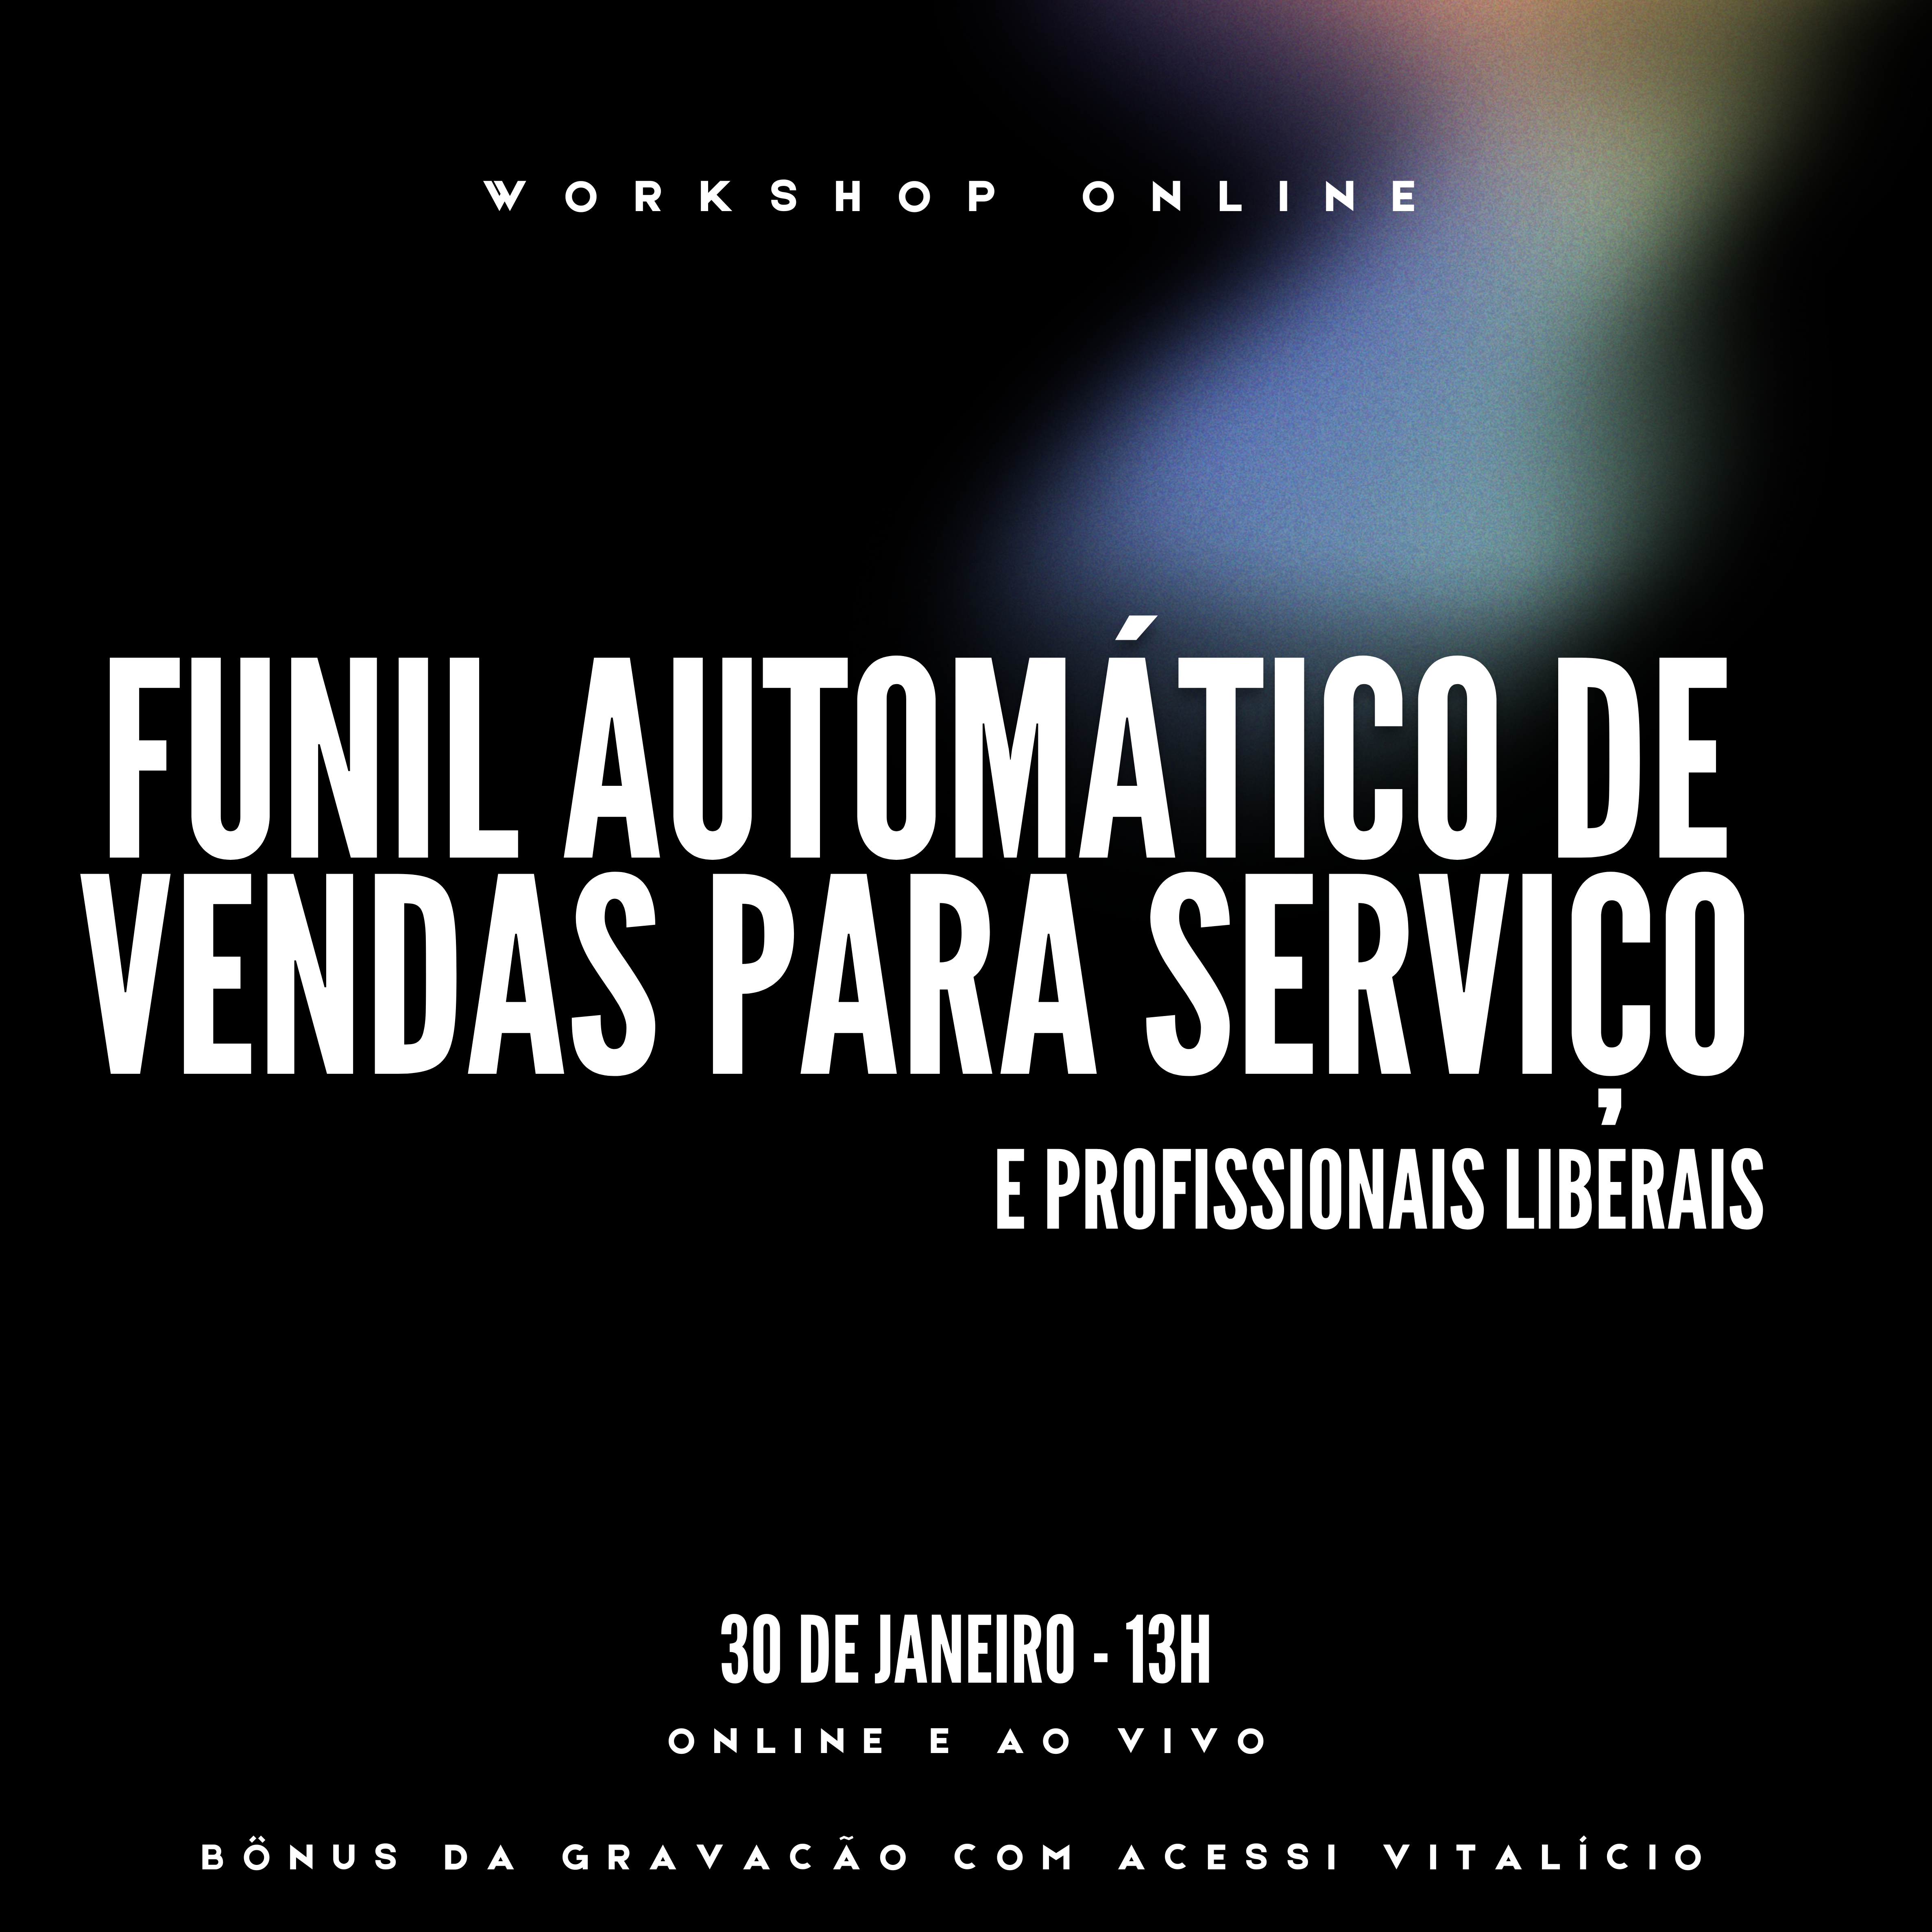 Workshop Online: Funil automático de vendas para serviço 49